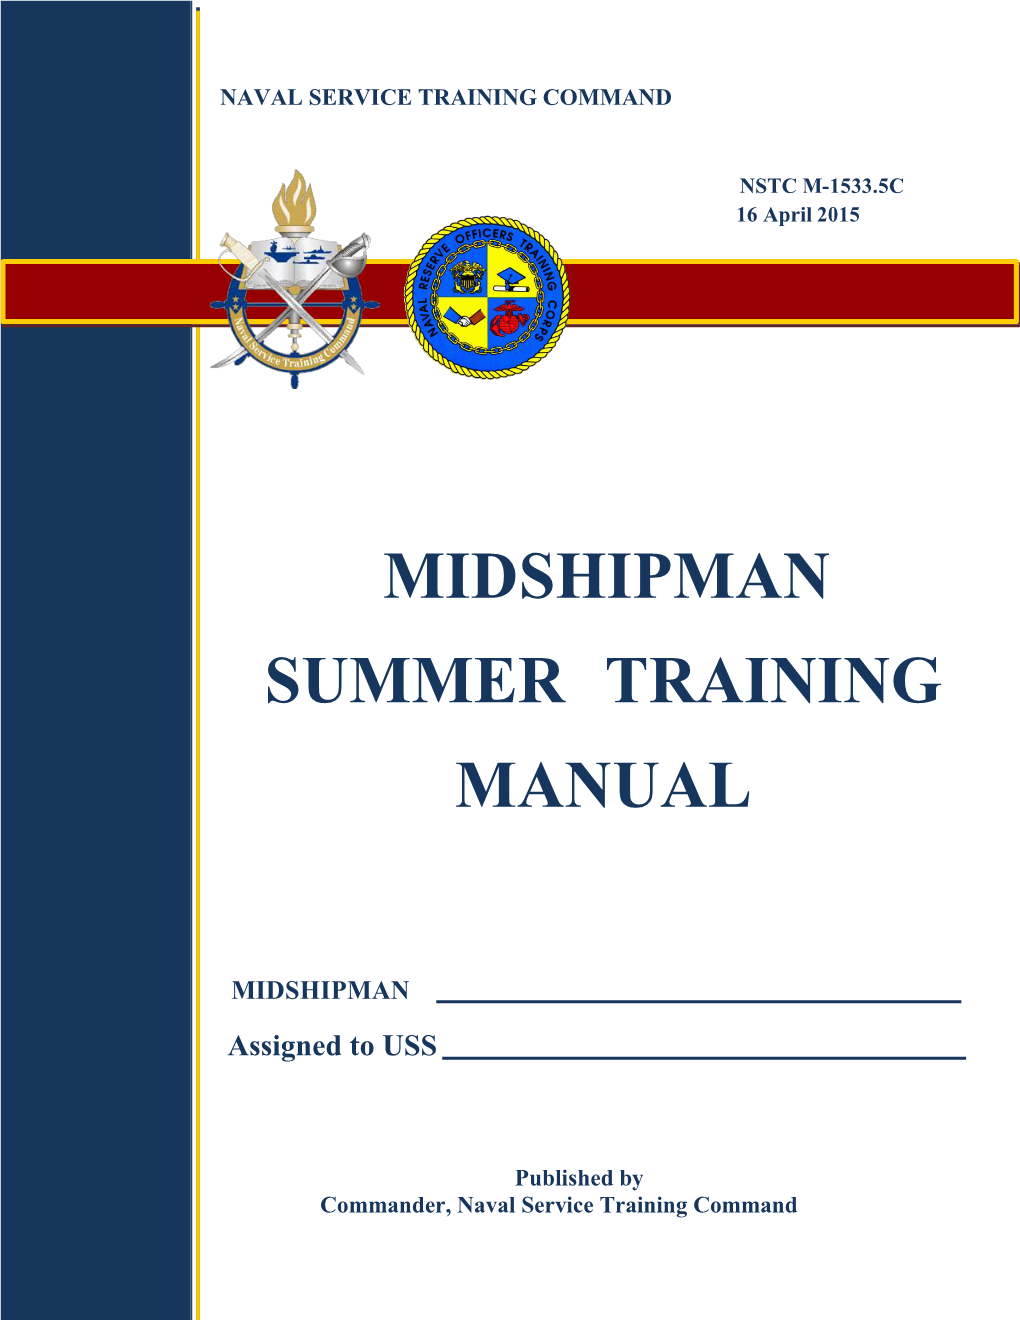 Midshipman Summer Training Manual